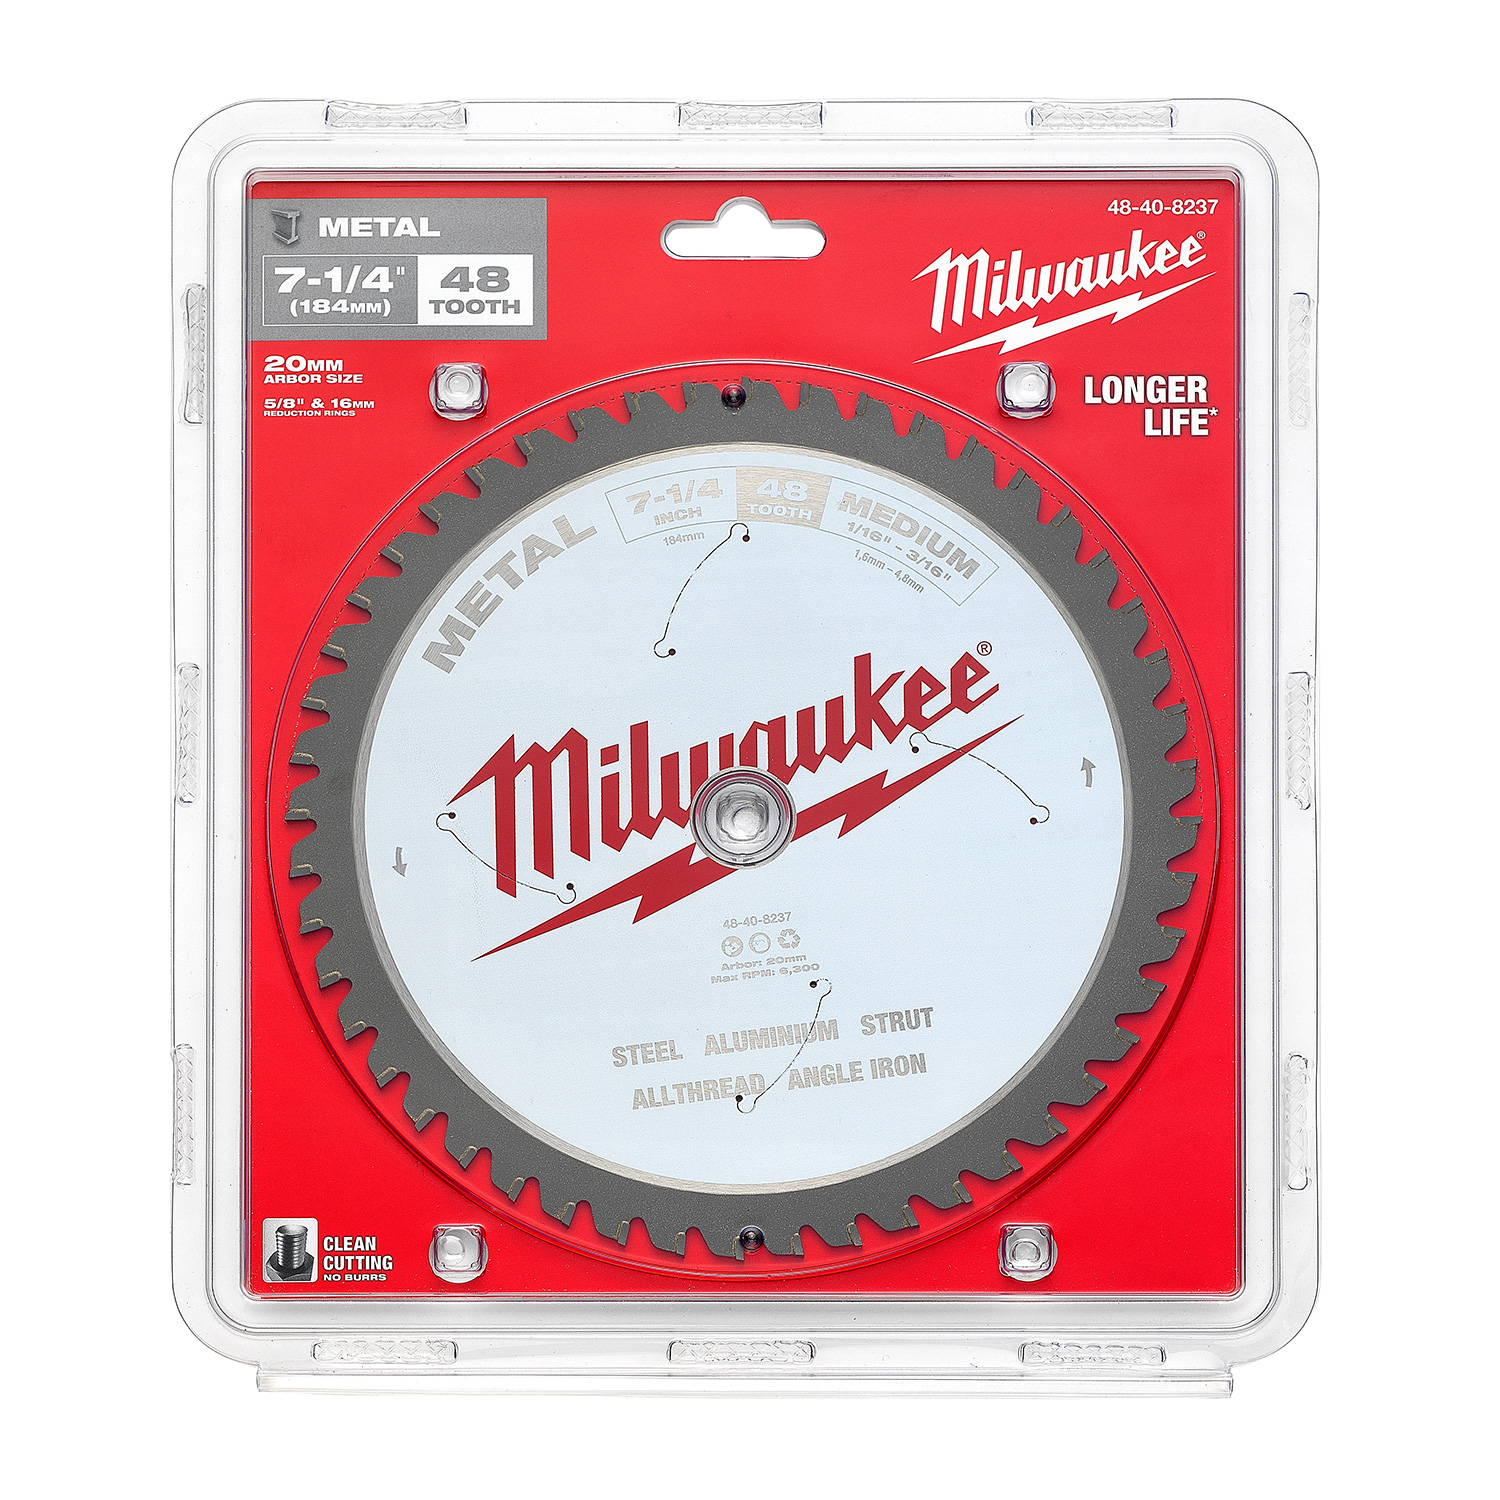 Milwaukee 184mm (7-1/4") 48T Medium Metal Circular Saw Blade 48408237